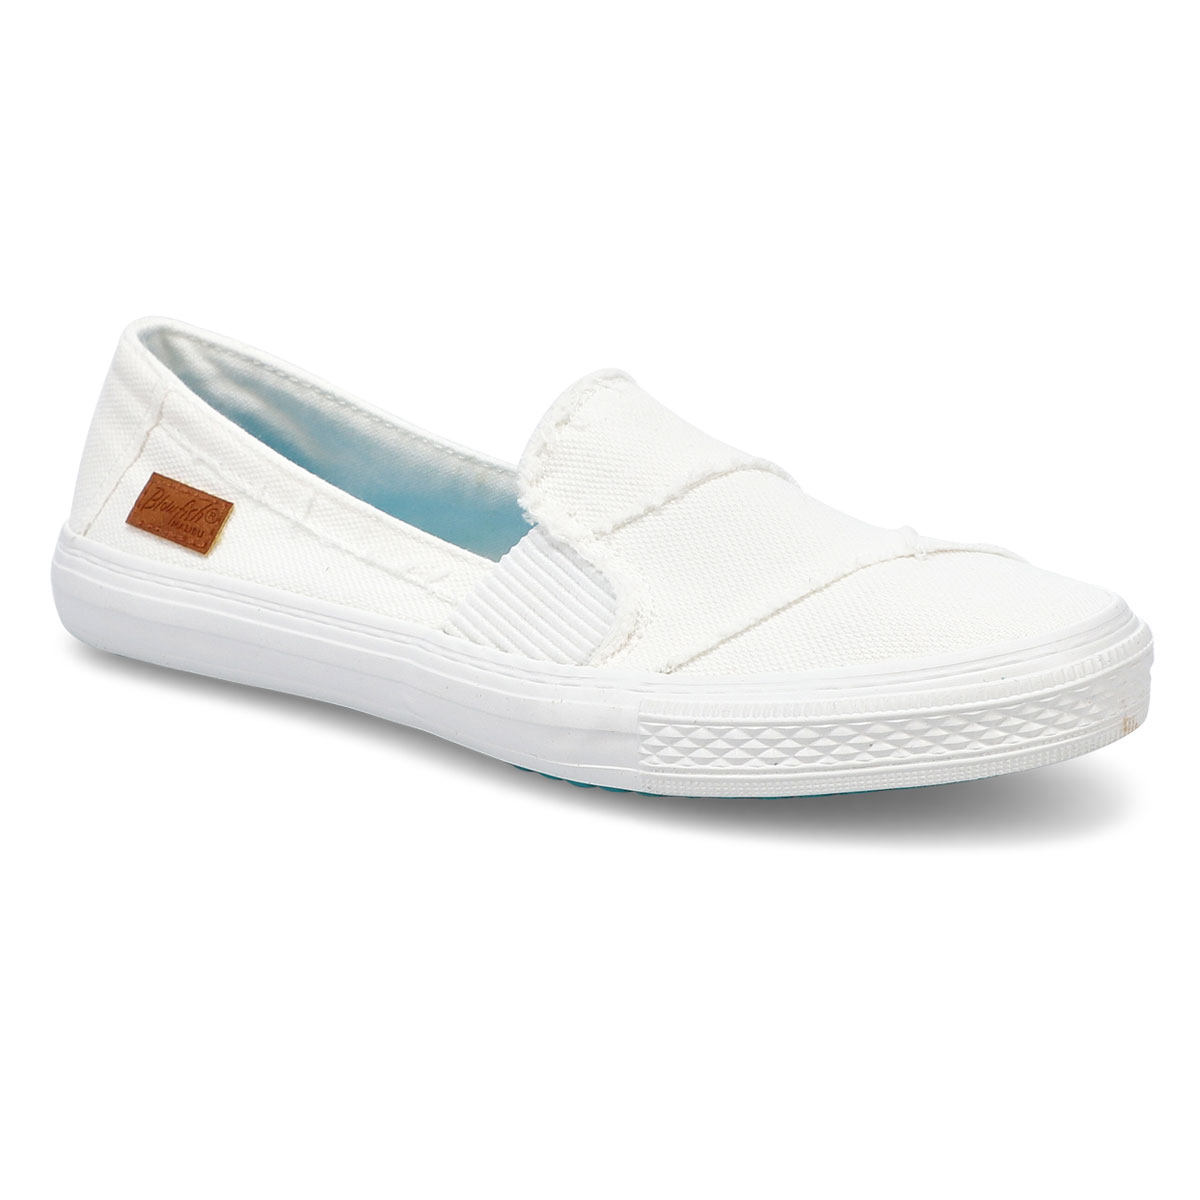 Blowfish Malibu Women's Alfie Sneaker - White | SoftMoc.com